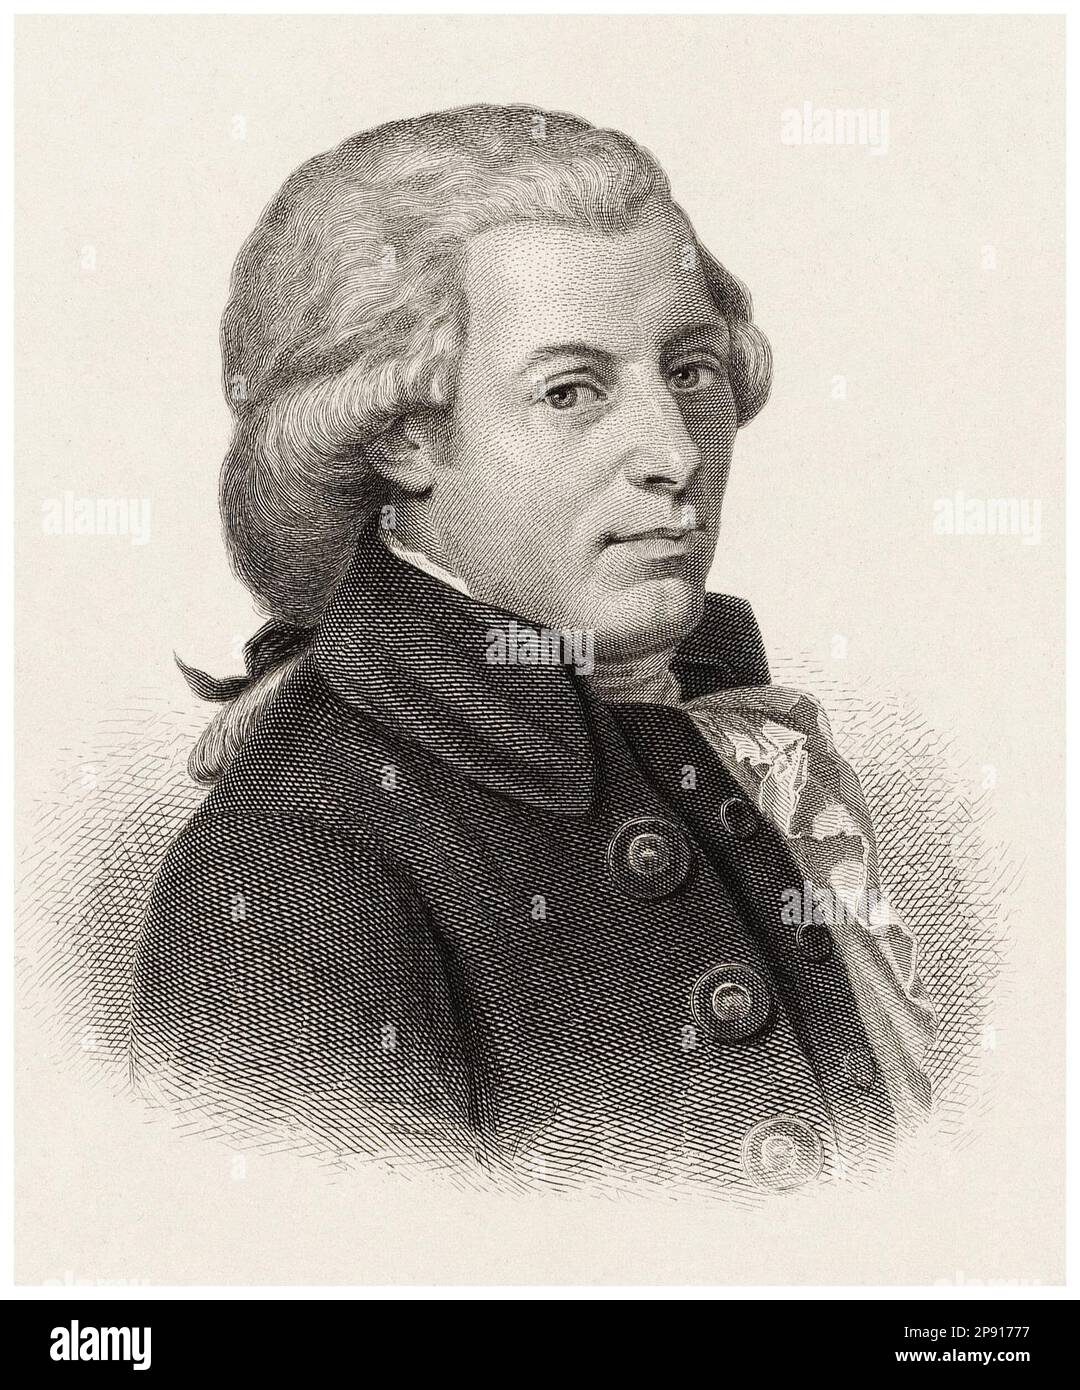 Wolfgang Amadeus Mozart (1756-1791), Composer, portrait engraving after Wilhelm Tischbein, 1801-1833 Stock Photo